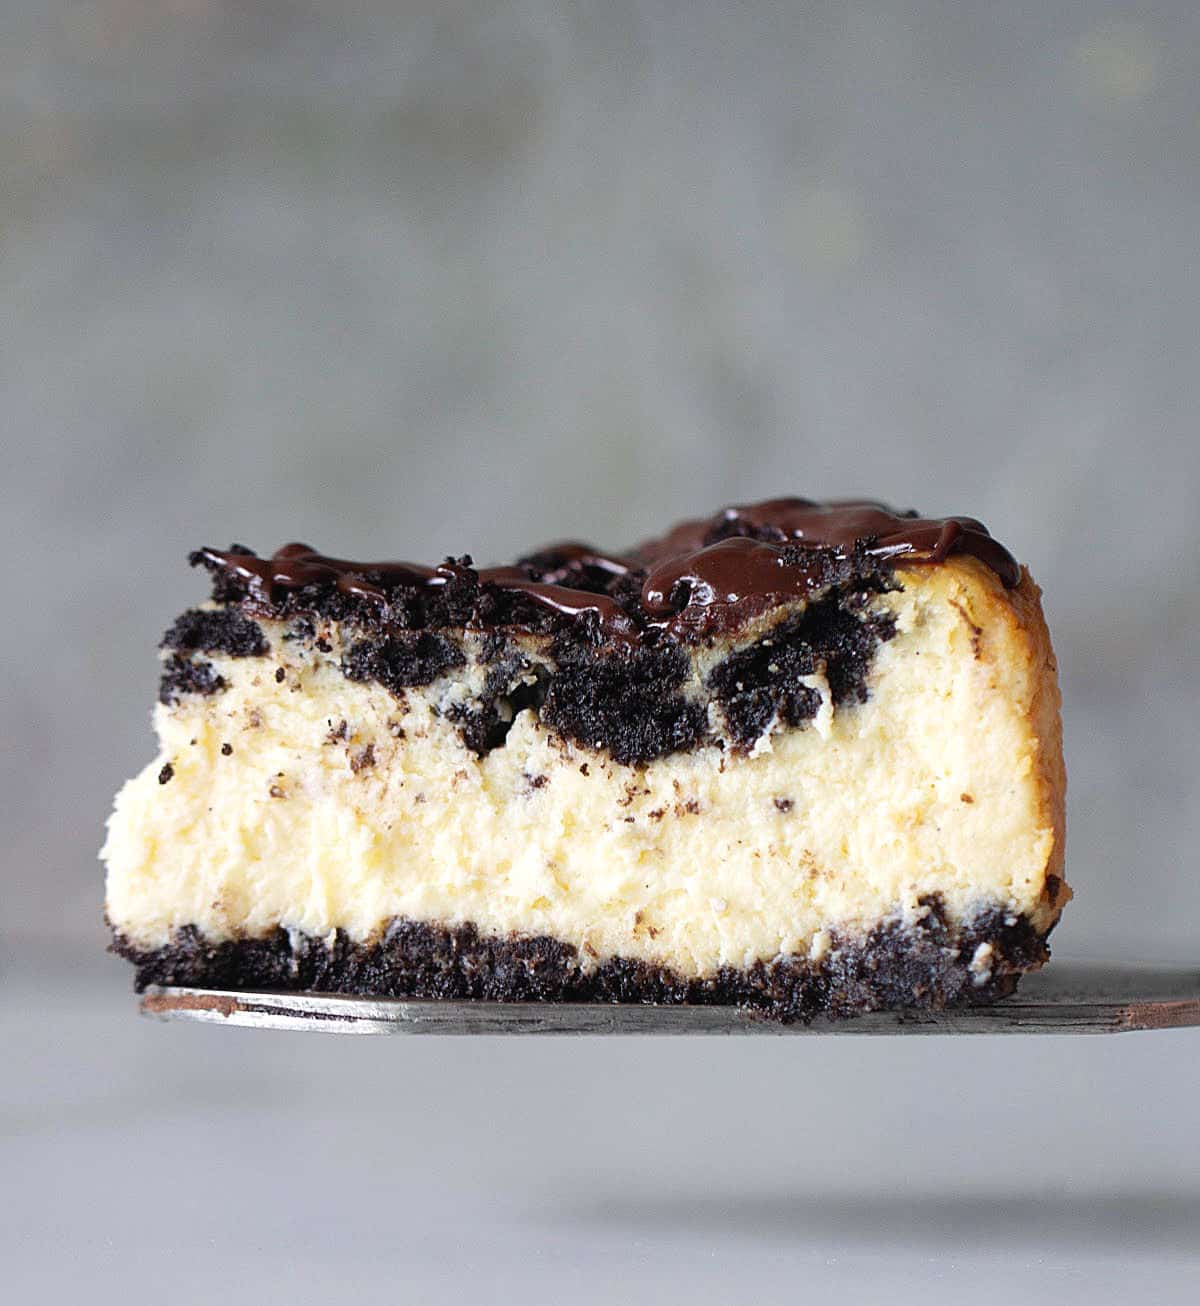 Single slice of Oreo Cheesecake on a cake server, grey background.